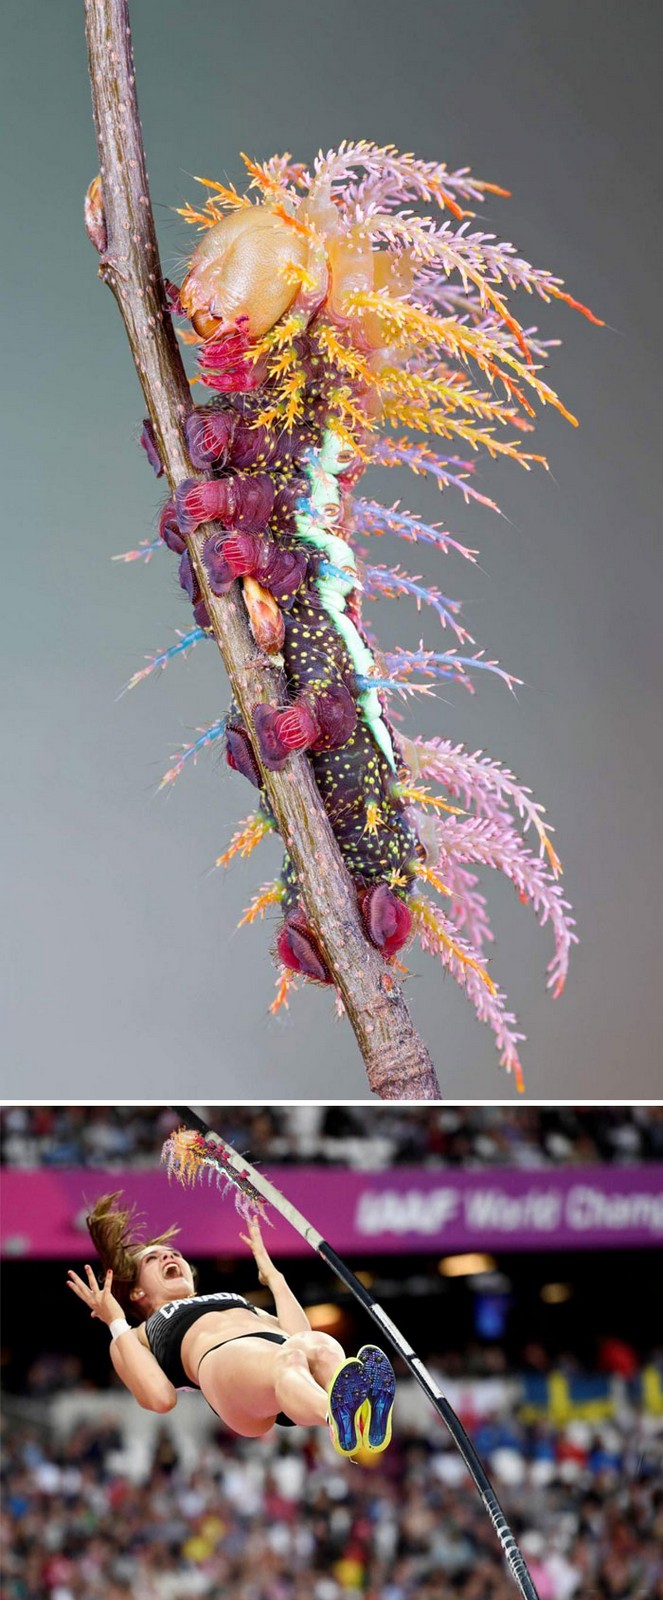 11 Epic Photoshop Battles - The Saturniidae moth caterpillar.